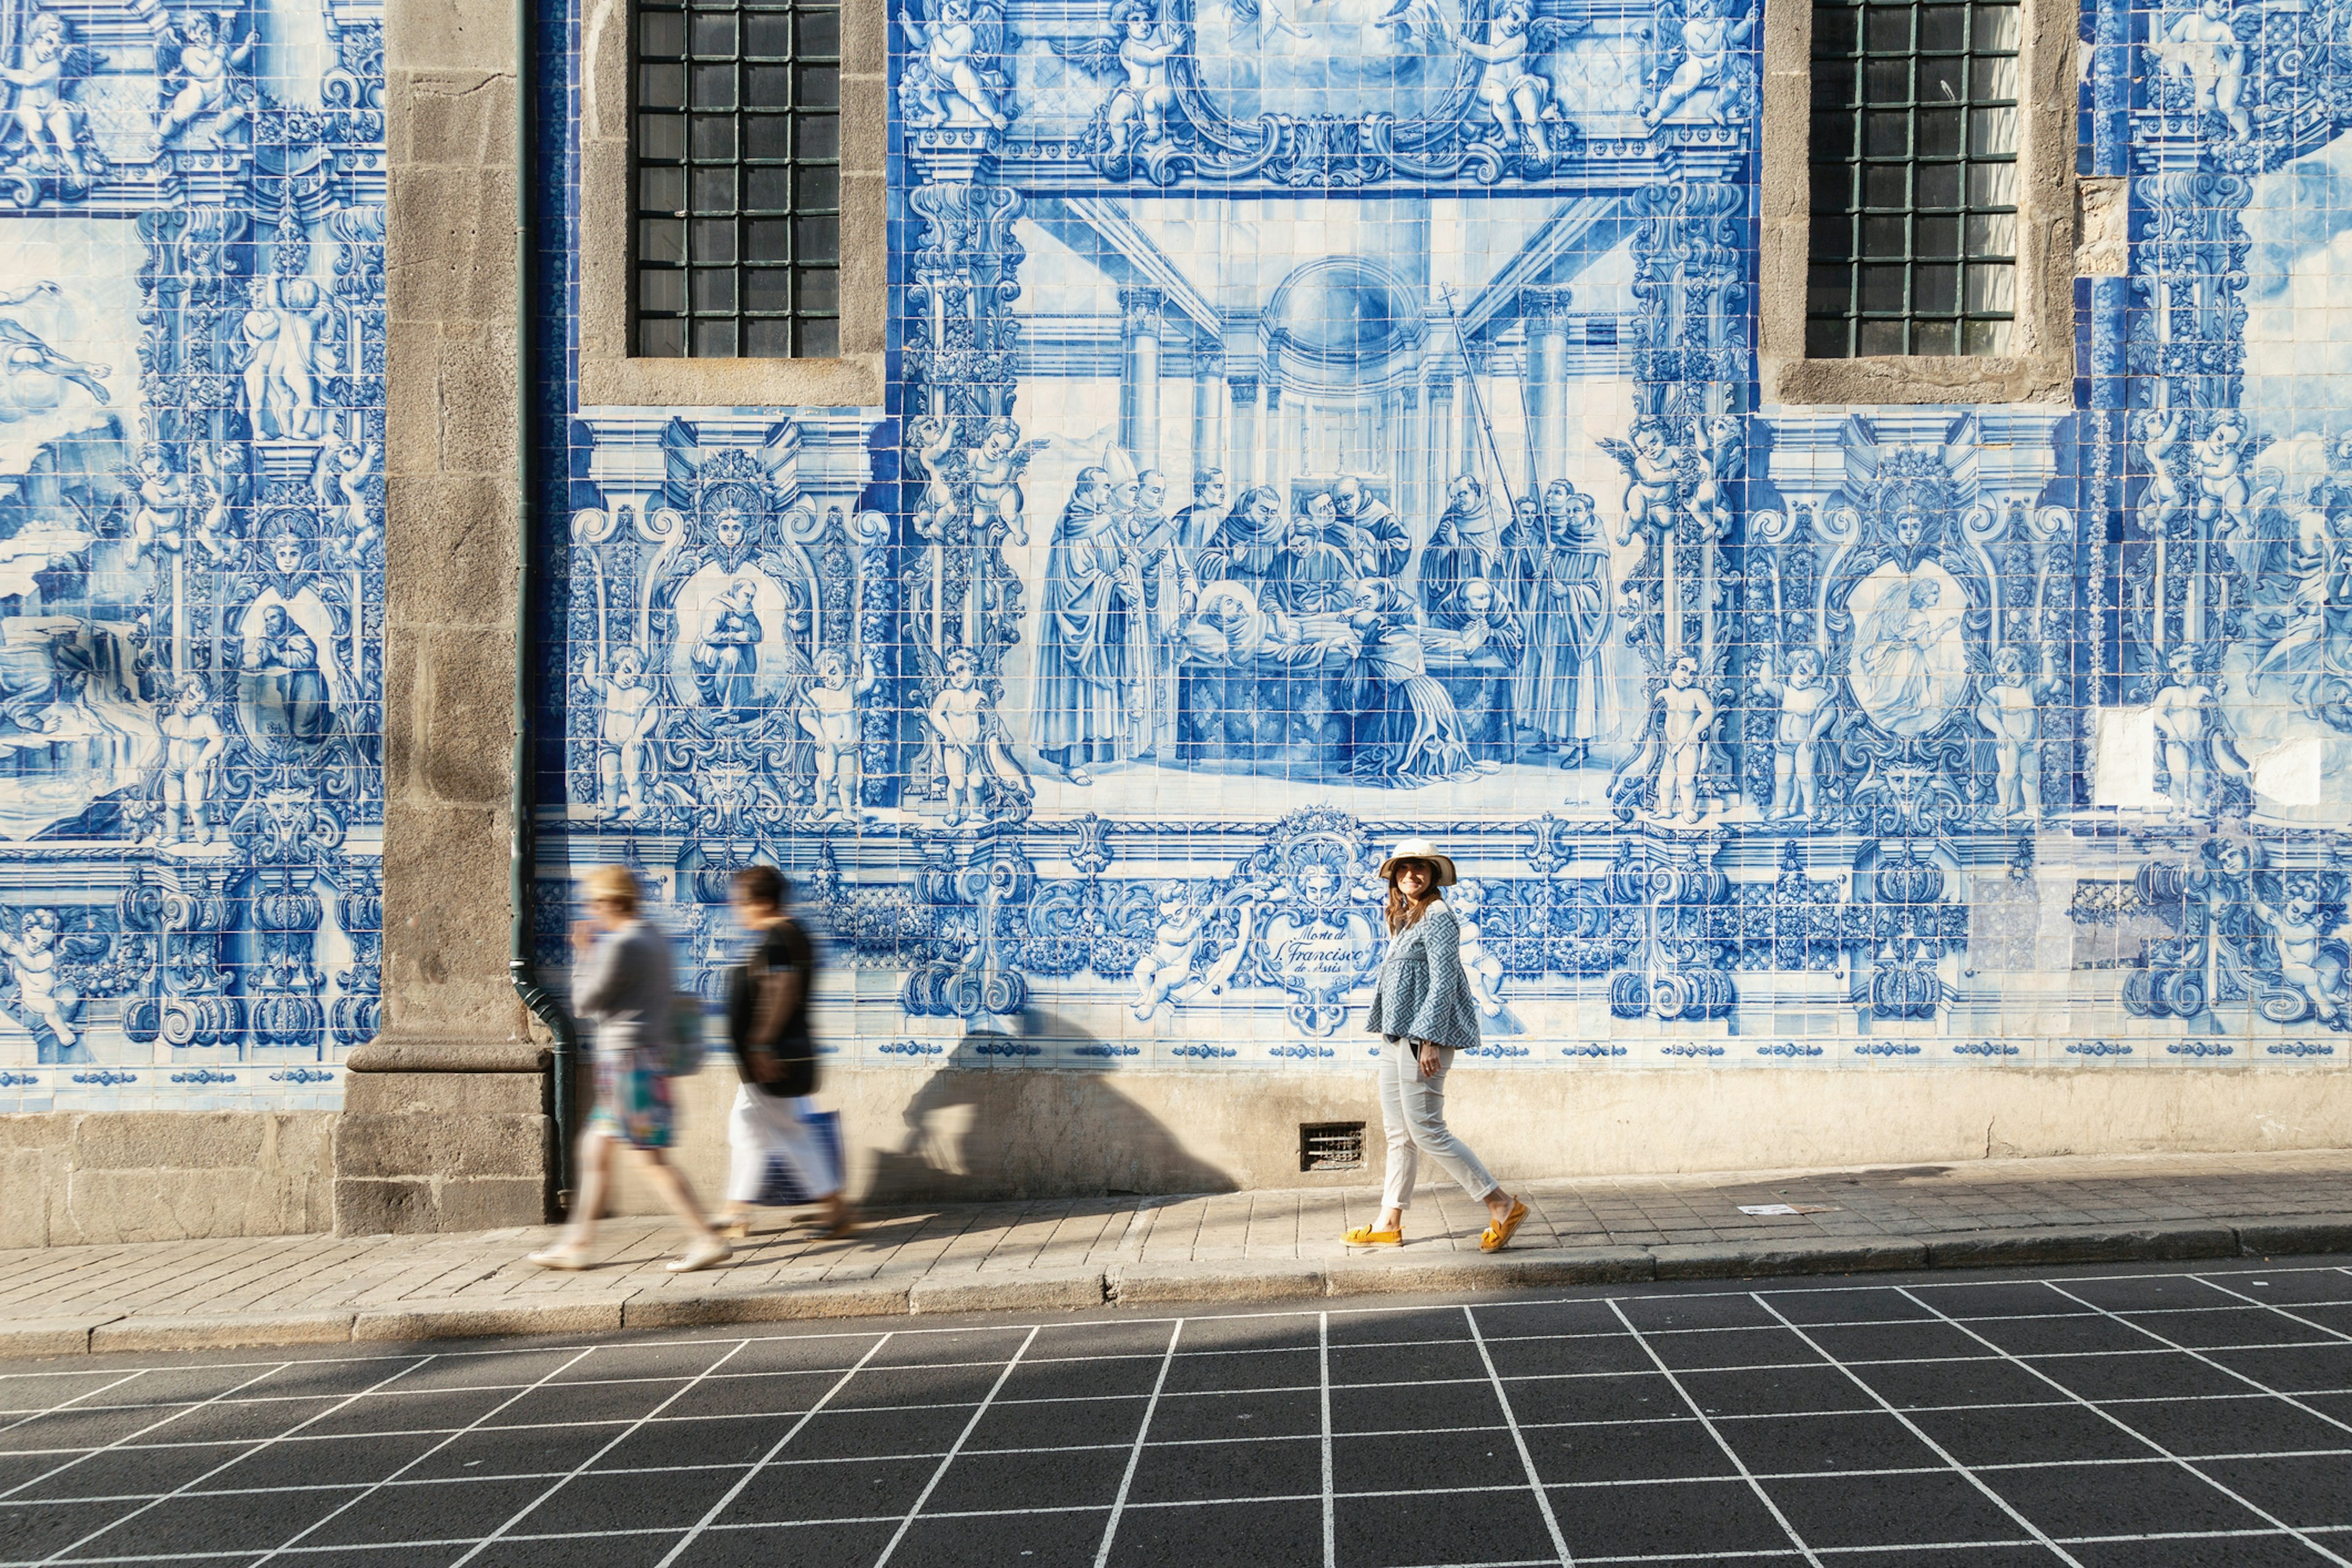 Woman walking in Porto against azulejos wall. Capela das Almas church, Portugal, Europe